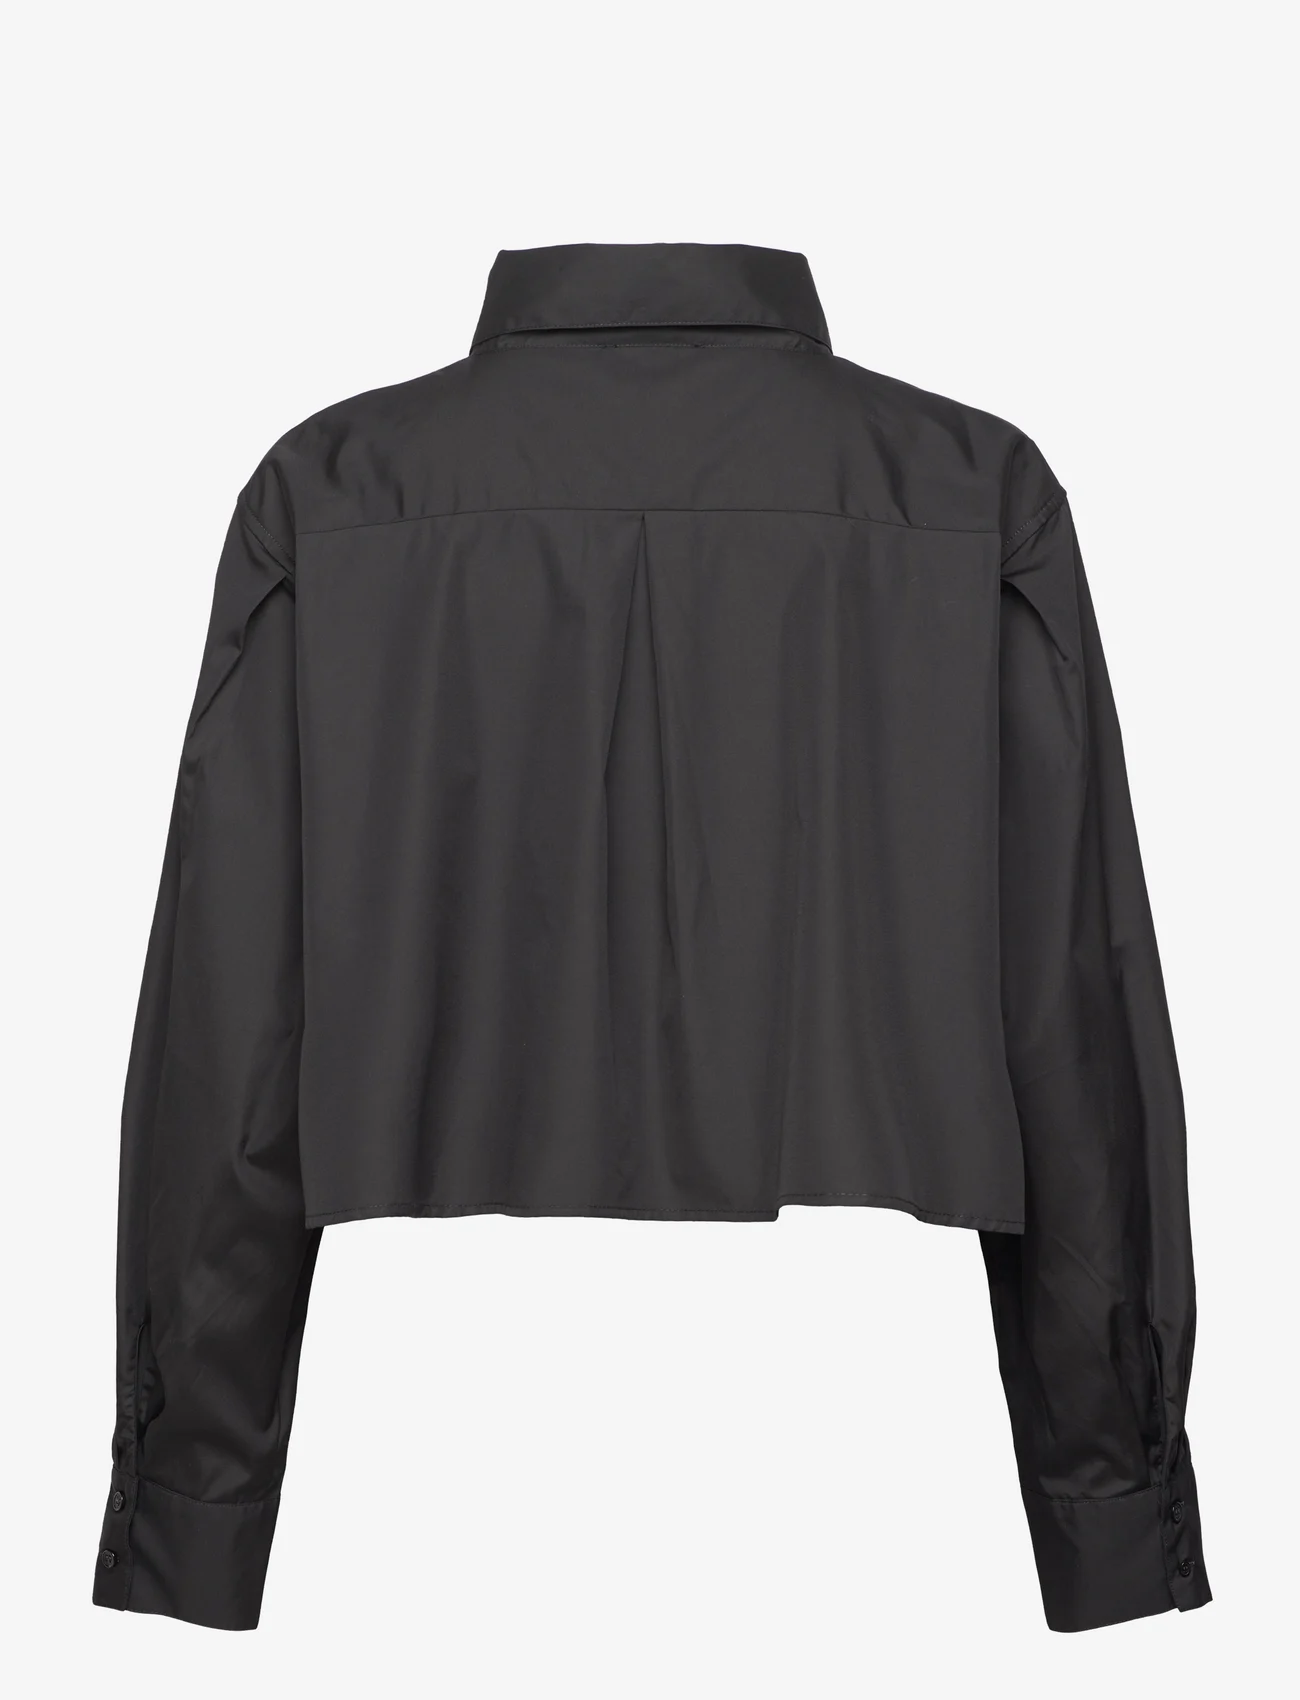 Stylein - JABE SHIRT - langärmlige hemden - black - 1